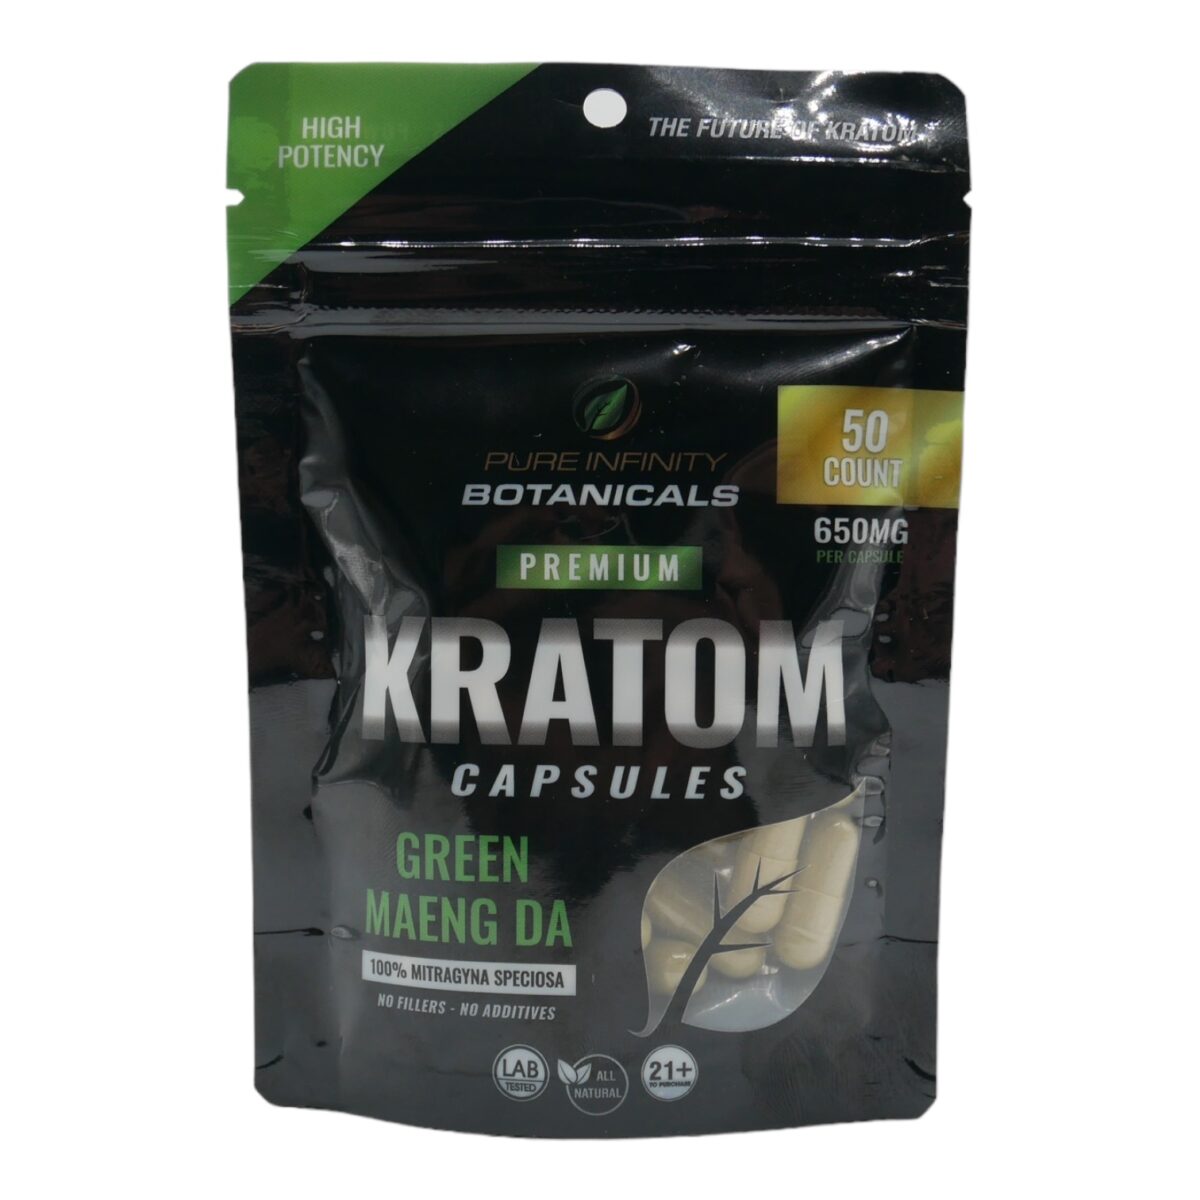 Pure Infinity Premium Kratom Green Maeng Da – Capsules (50 Count)